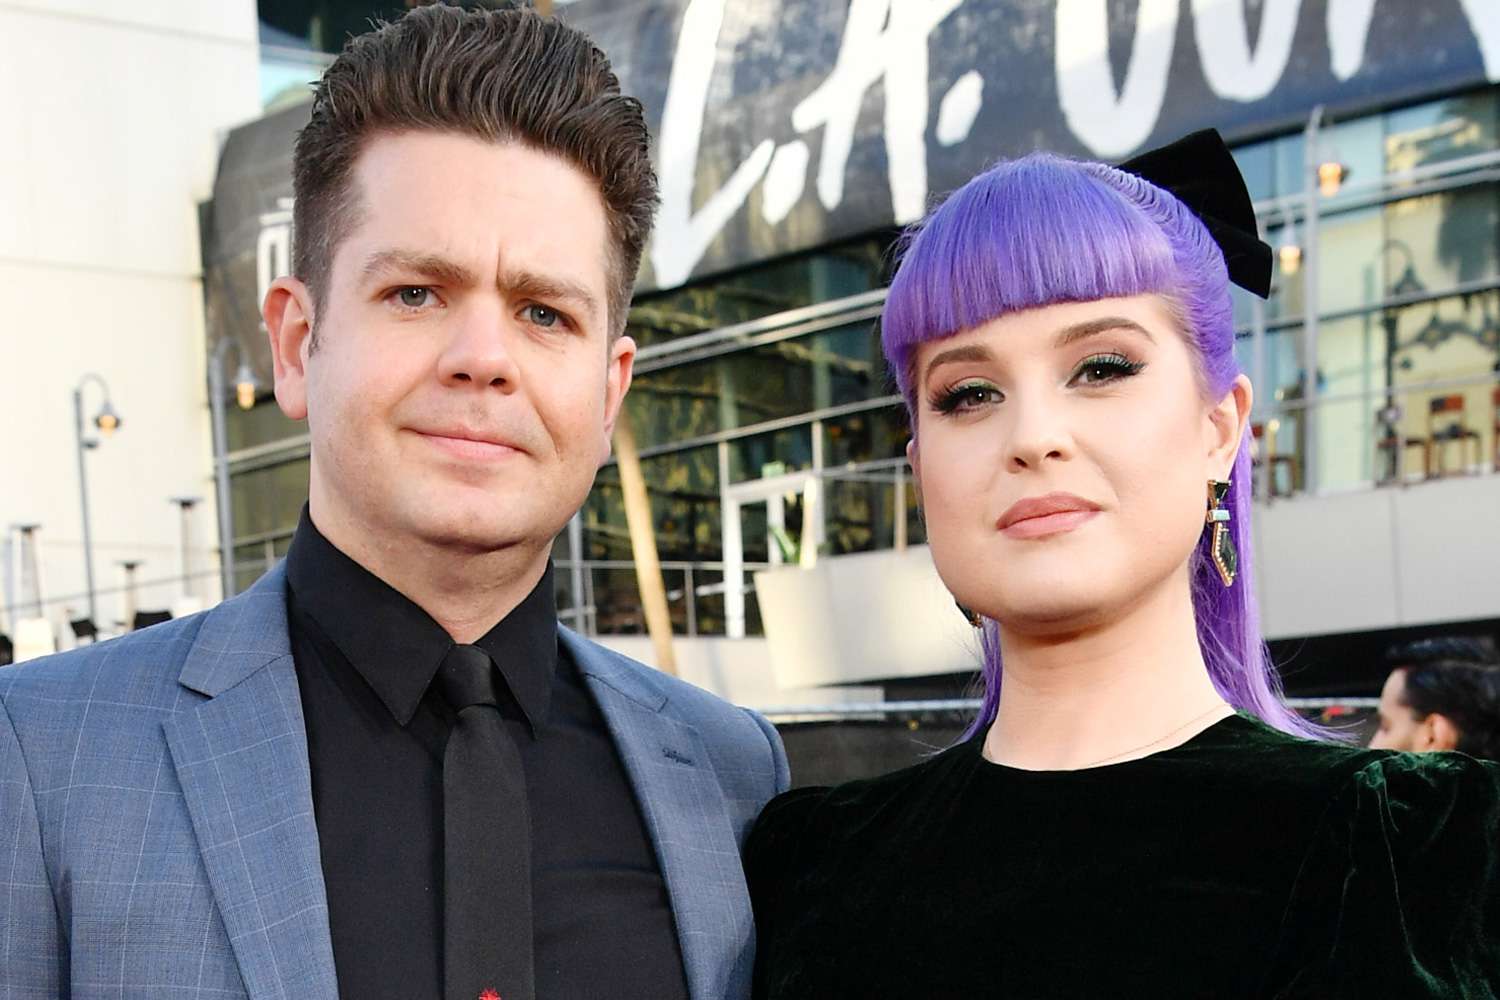 Jack Osbourne and Kelly Osbourne attend the 2019 American Music Awards